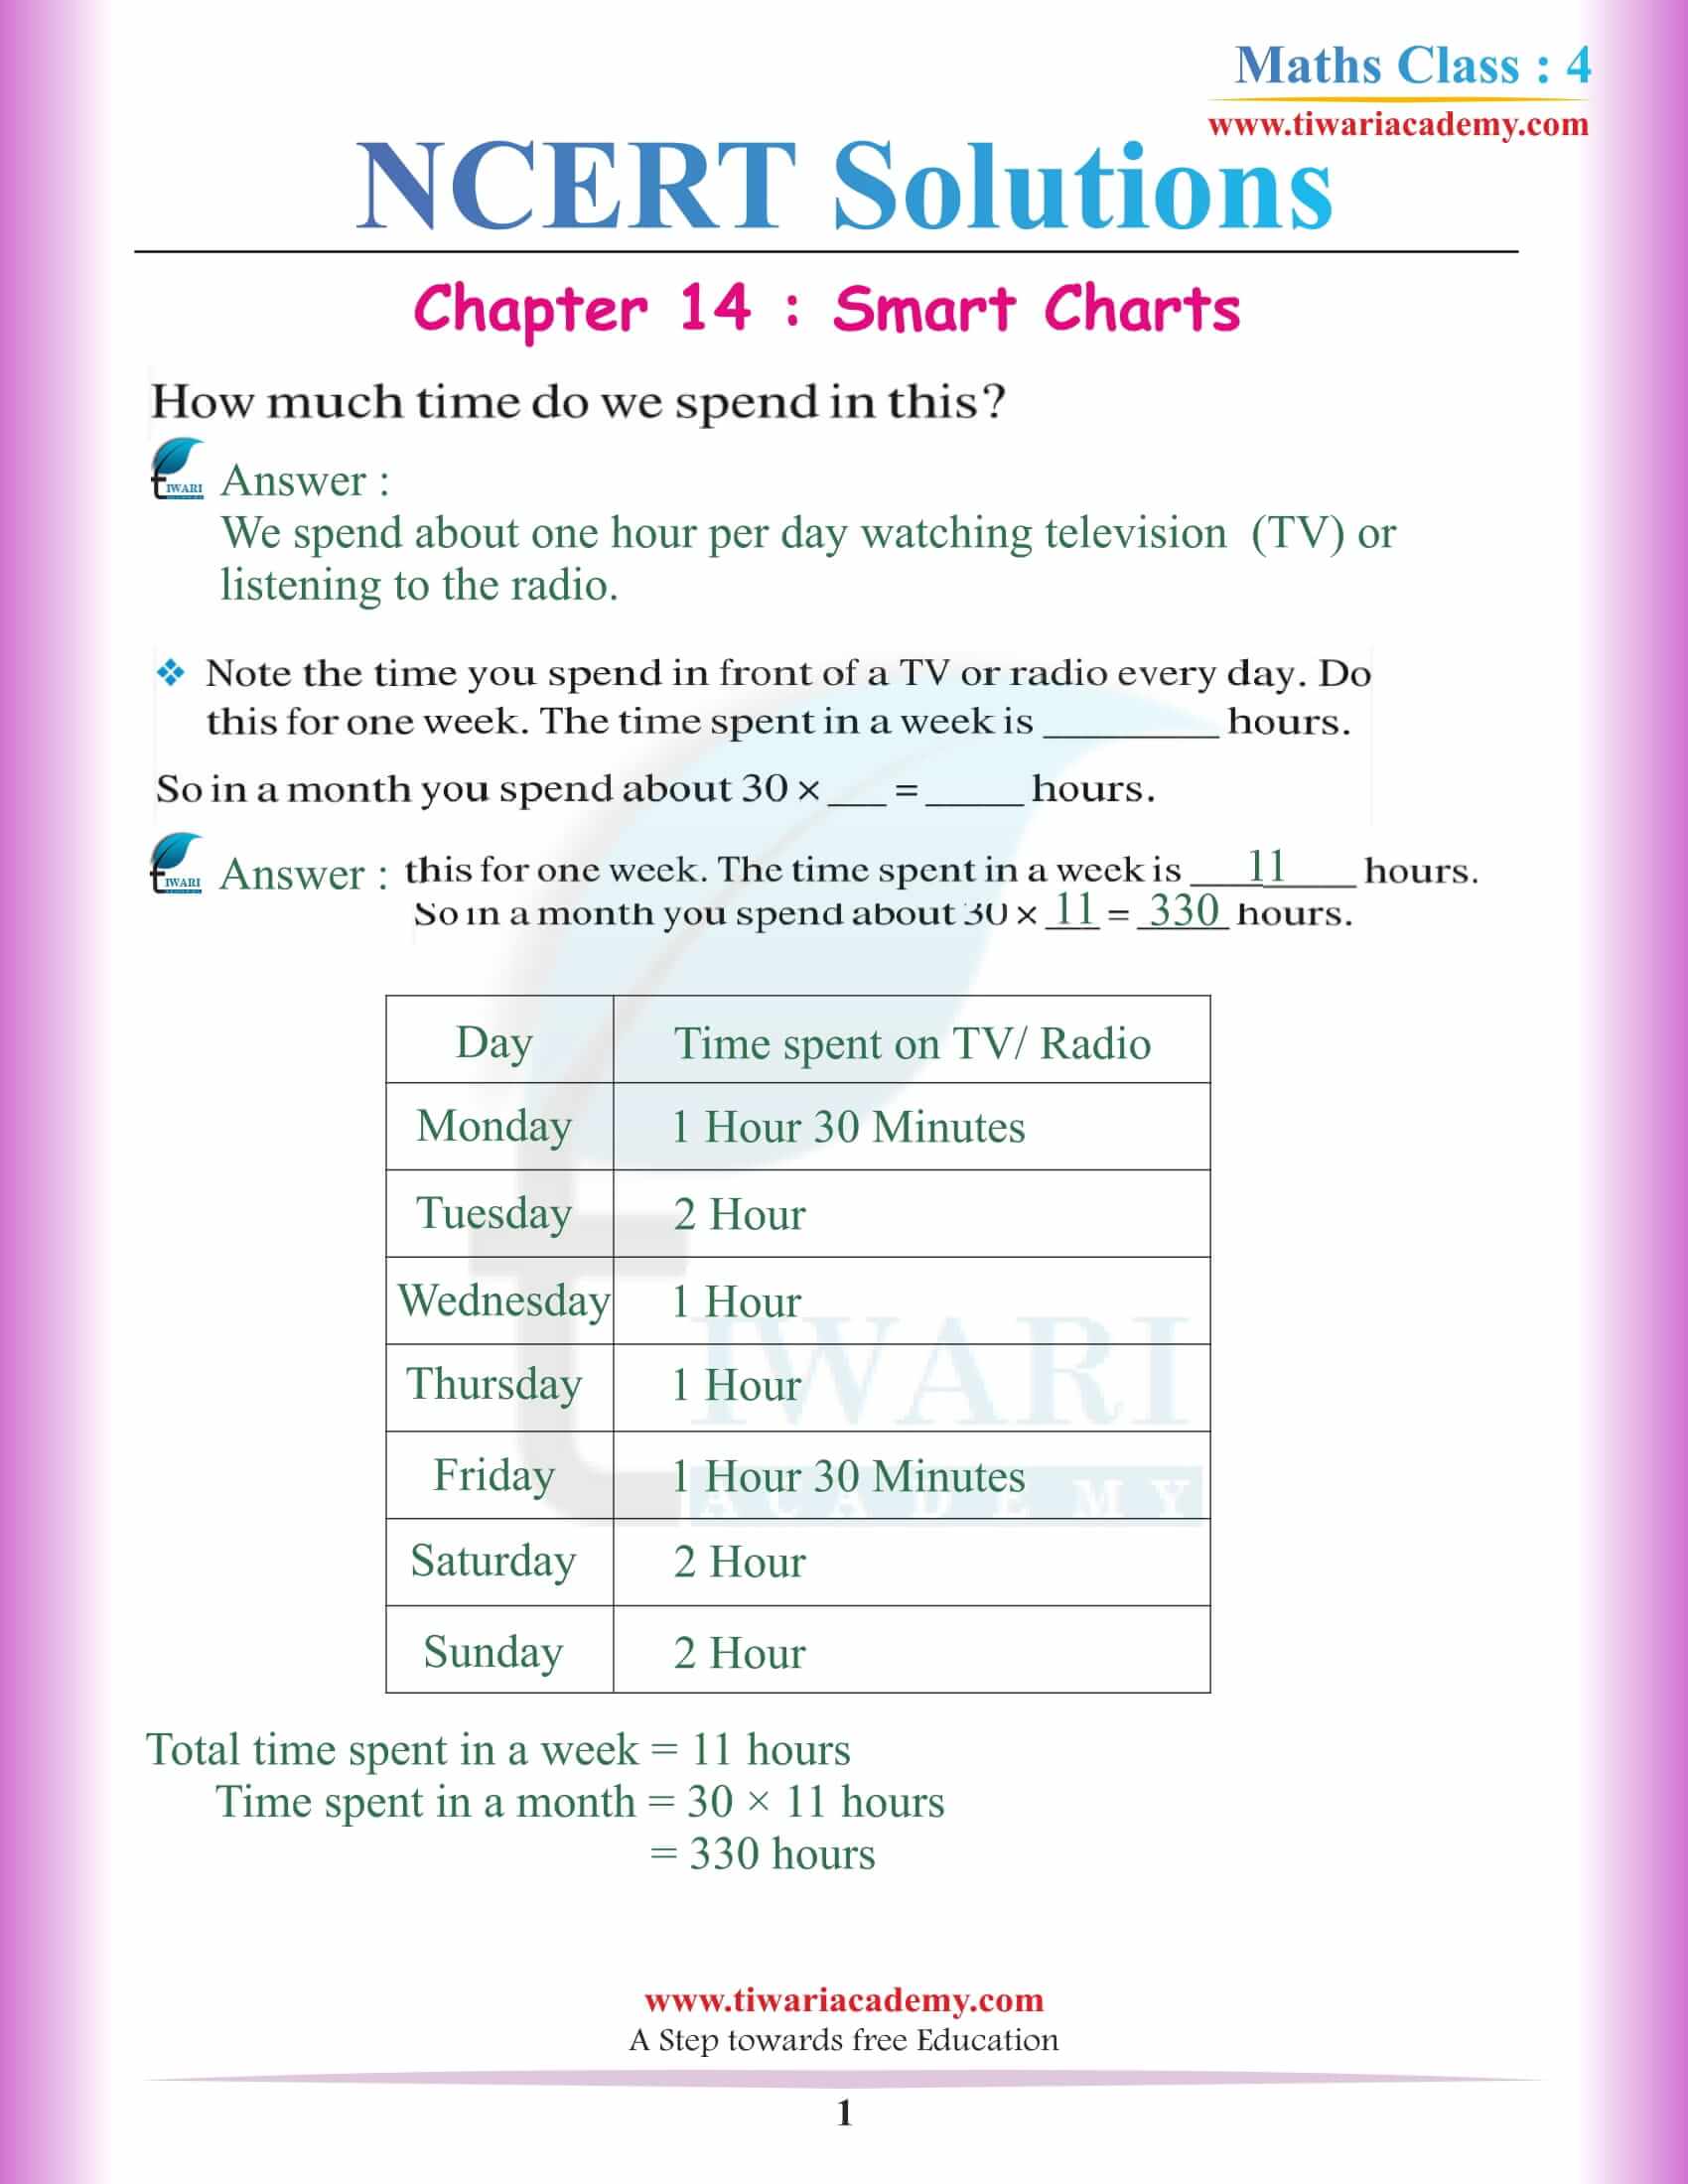 NCERT Solutions for Class 4 Maths Chapter 14 Smart Charts